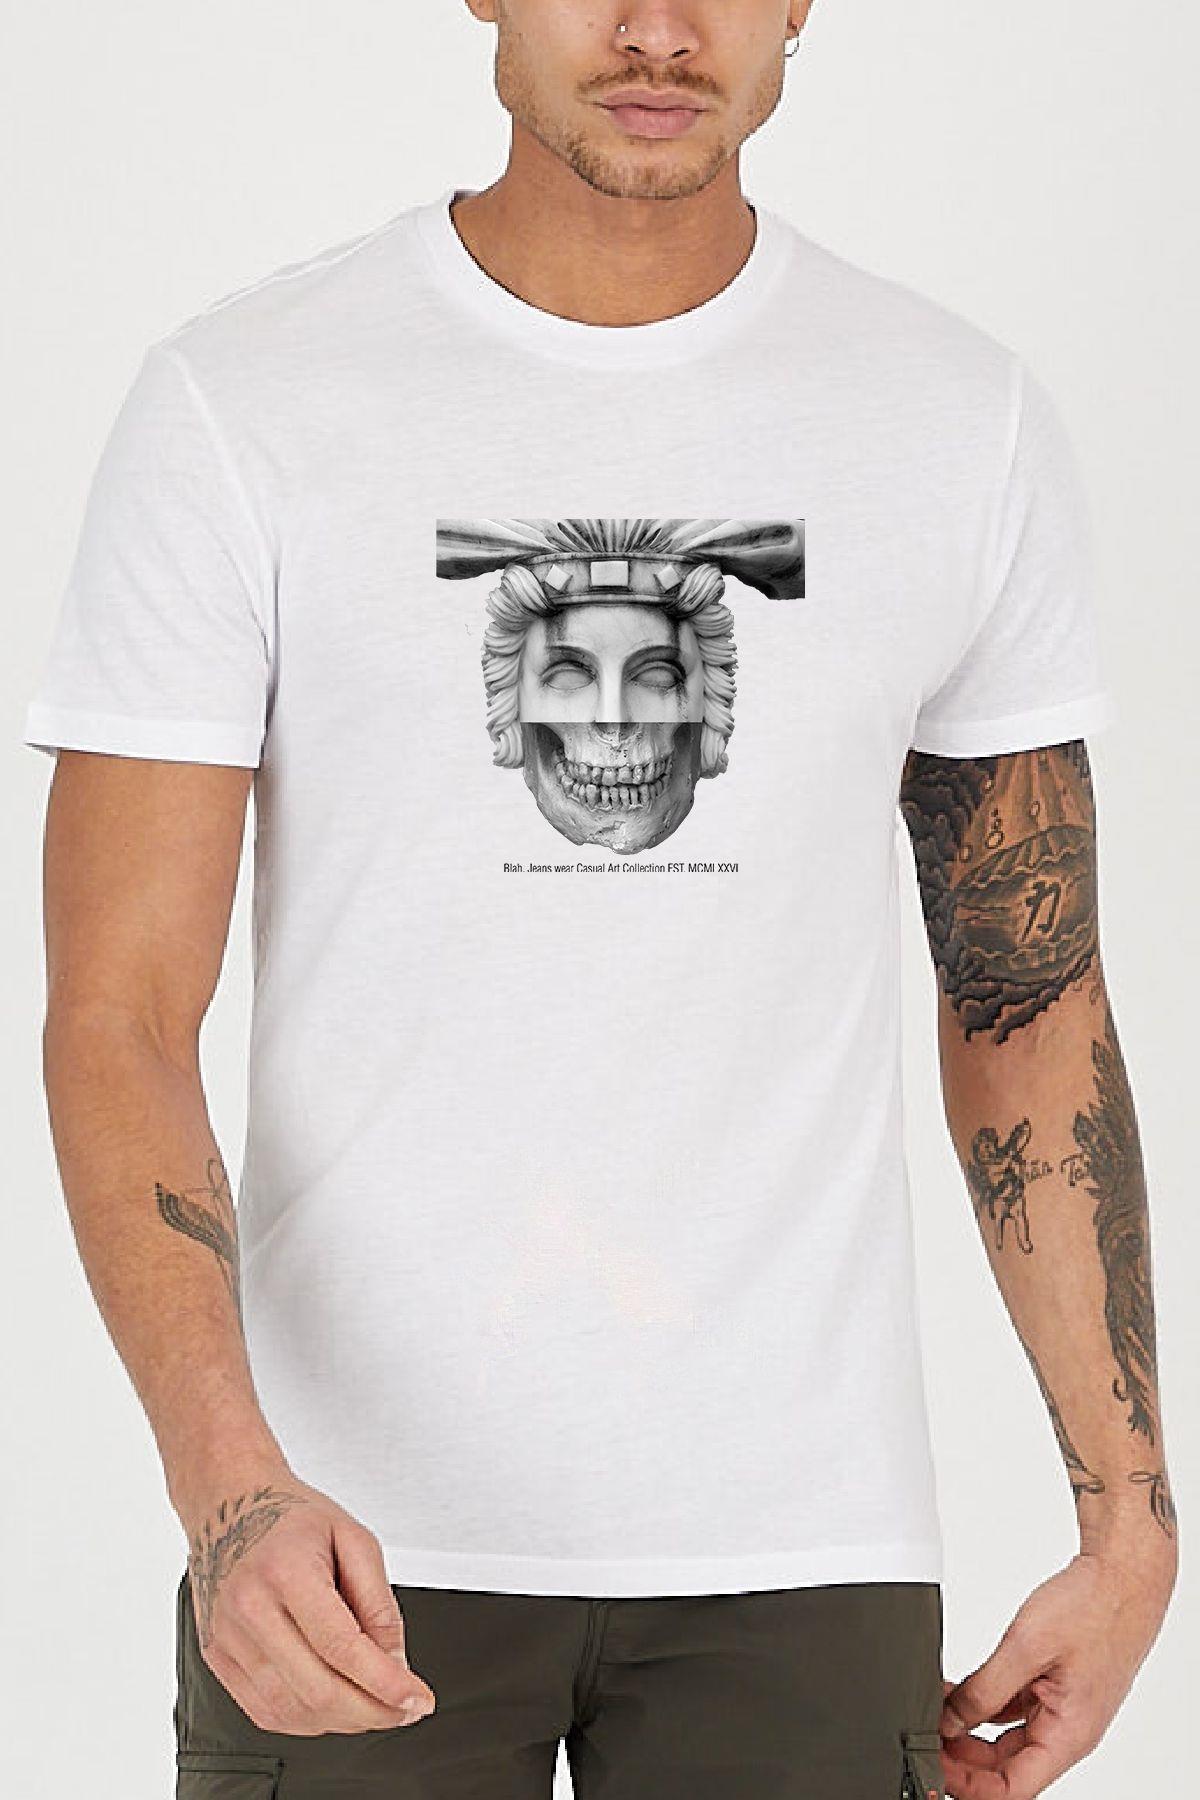 Sculpture skeleton printed Crew Neck men's t -shirt